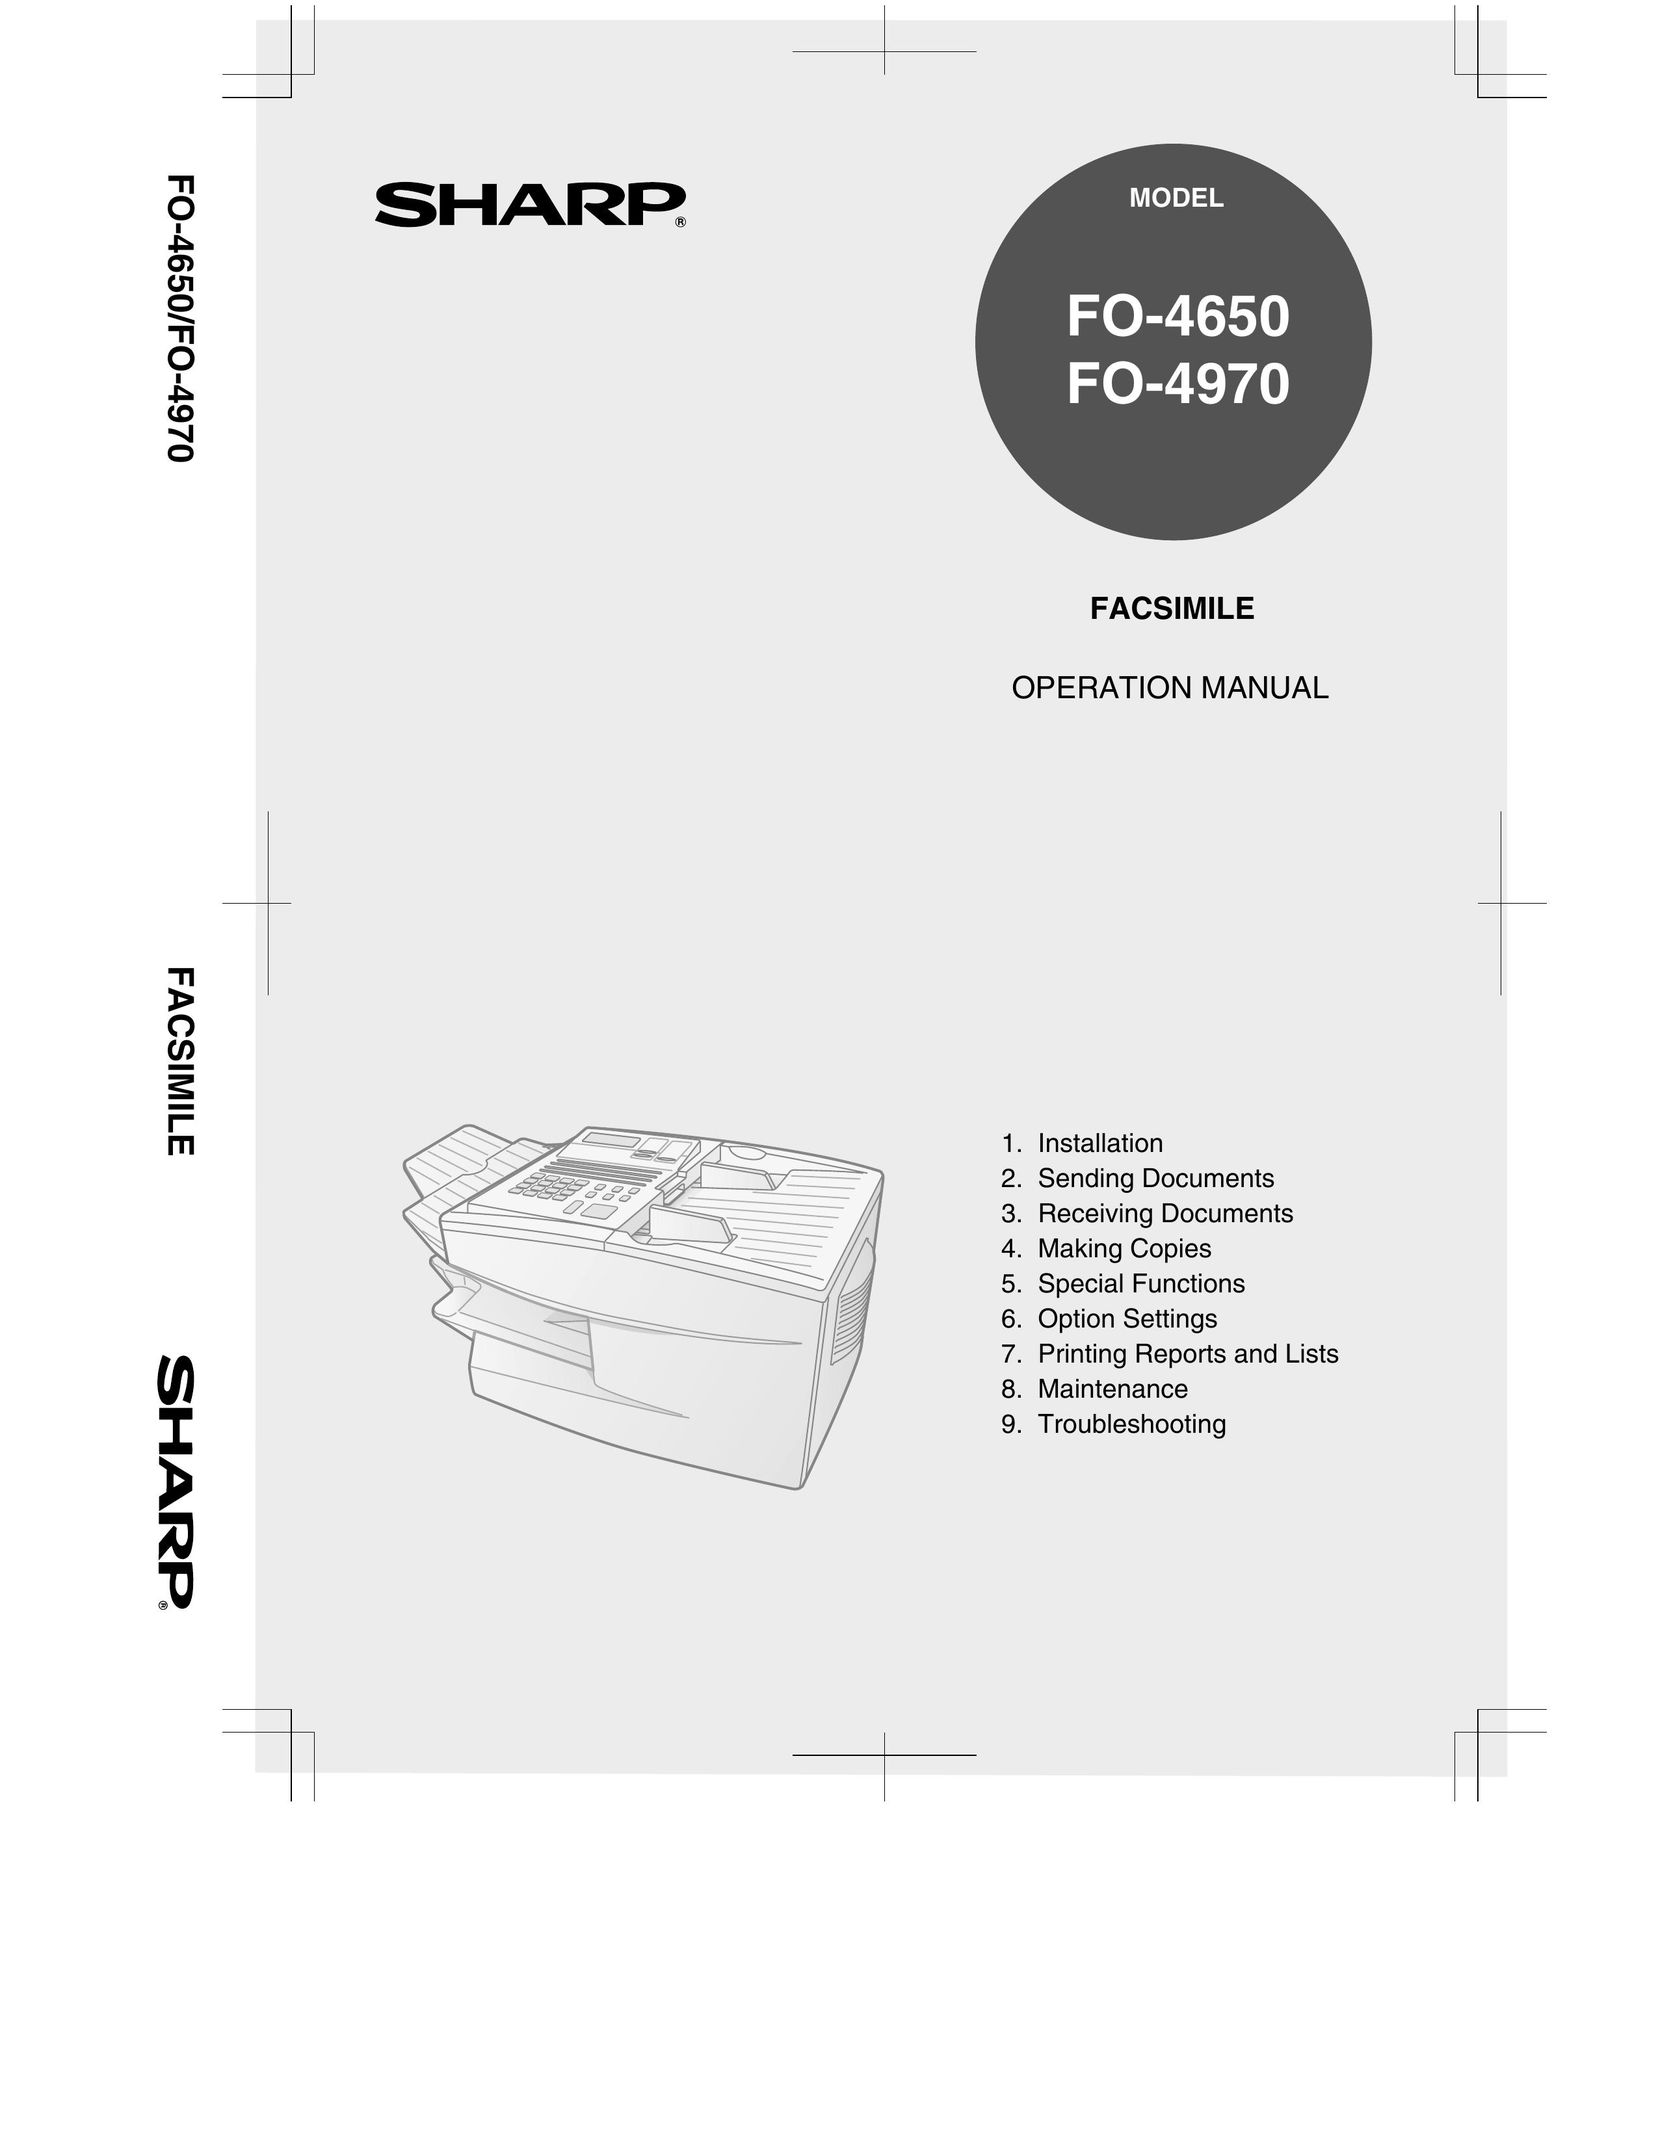 Sharp FO-4970 Fax Machine User Manual